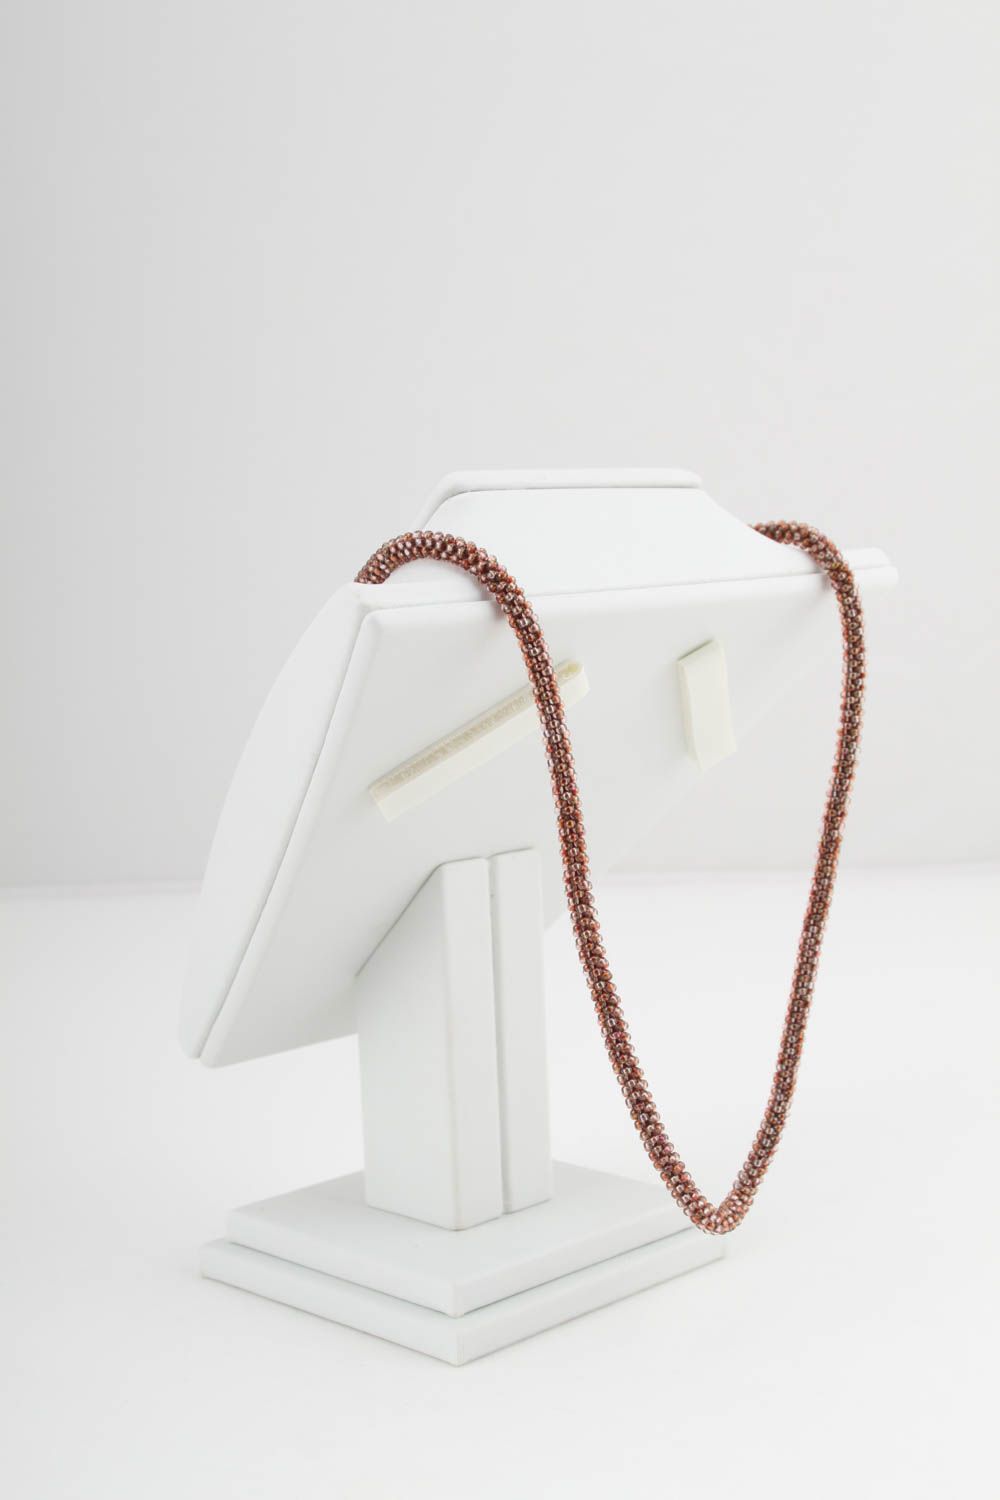 Stylish beaded necklace handmade pendant designer accessories fashion jewelry photo 3